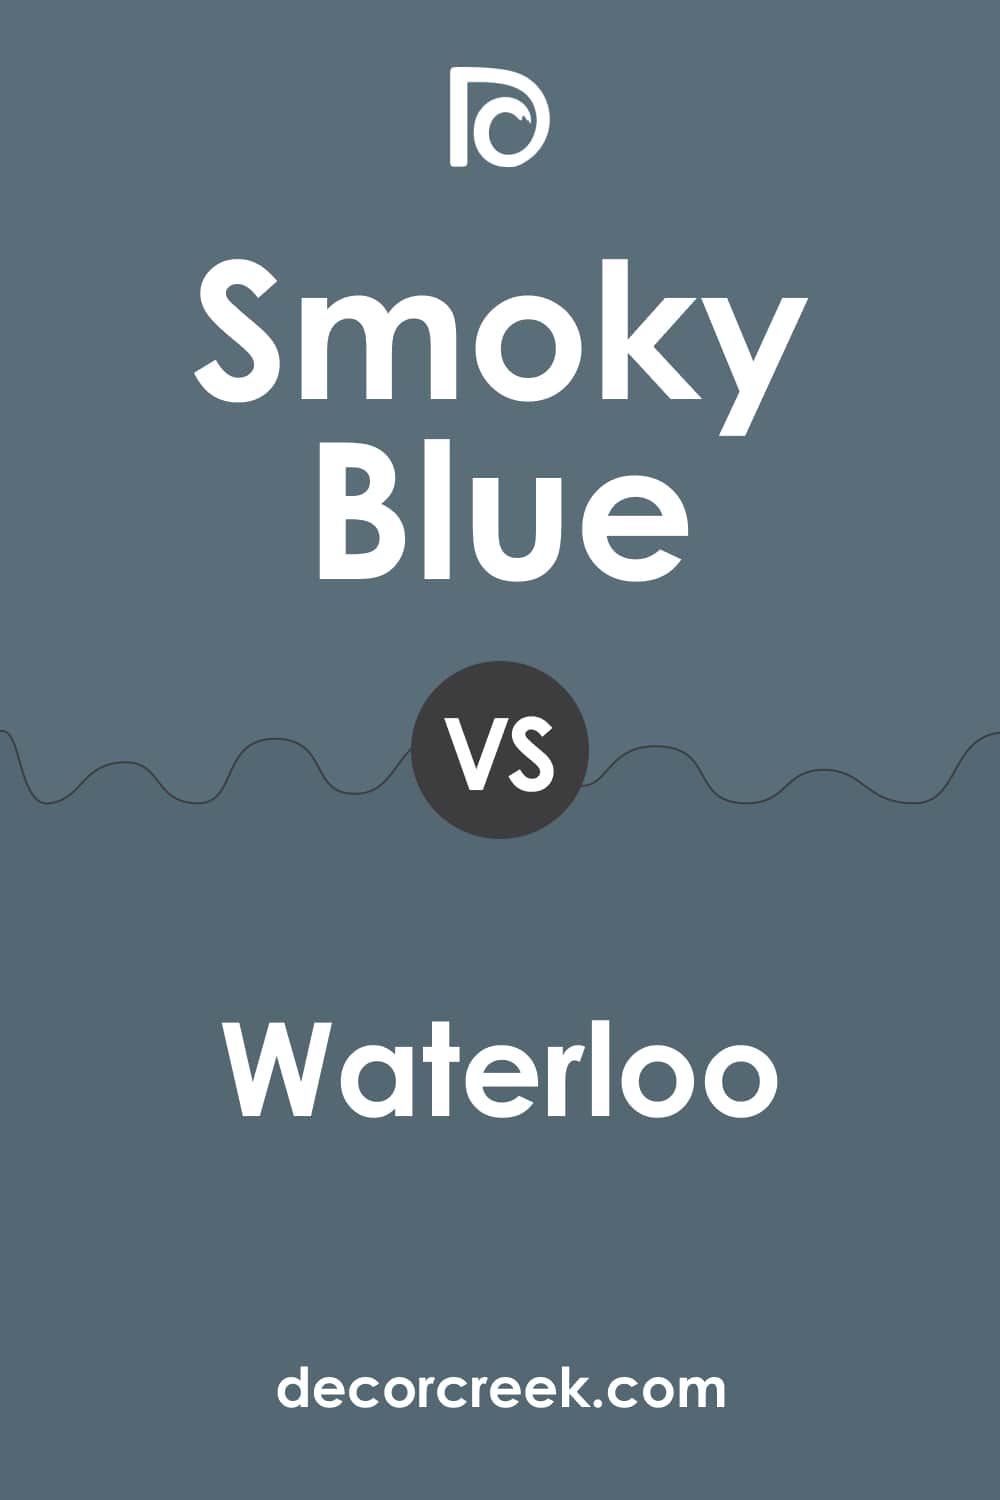 Smoky Blue vs. Waterloo